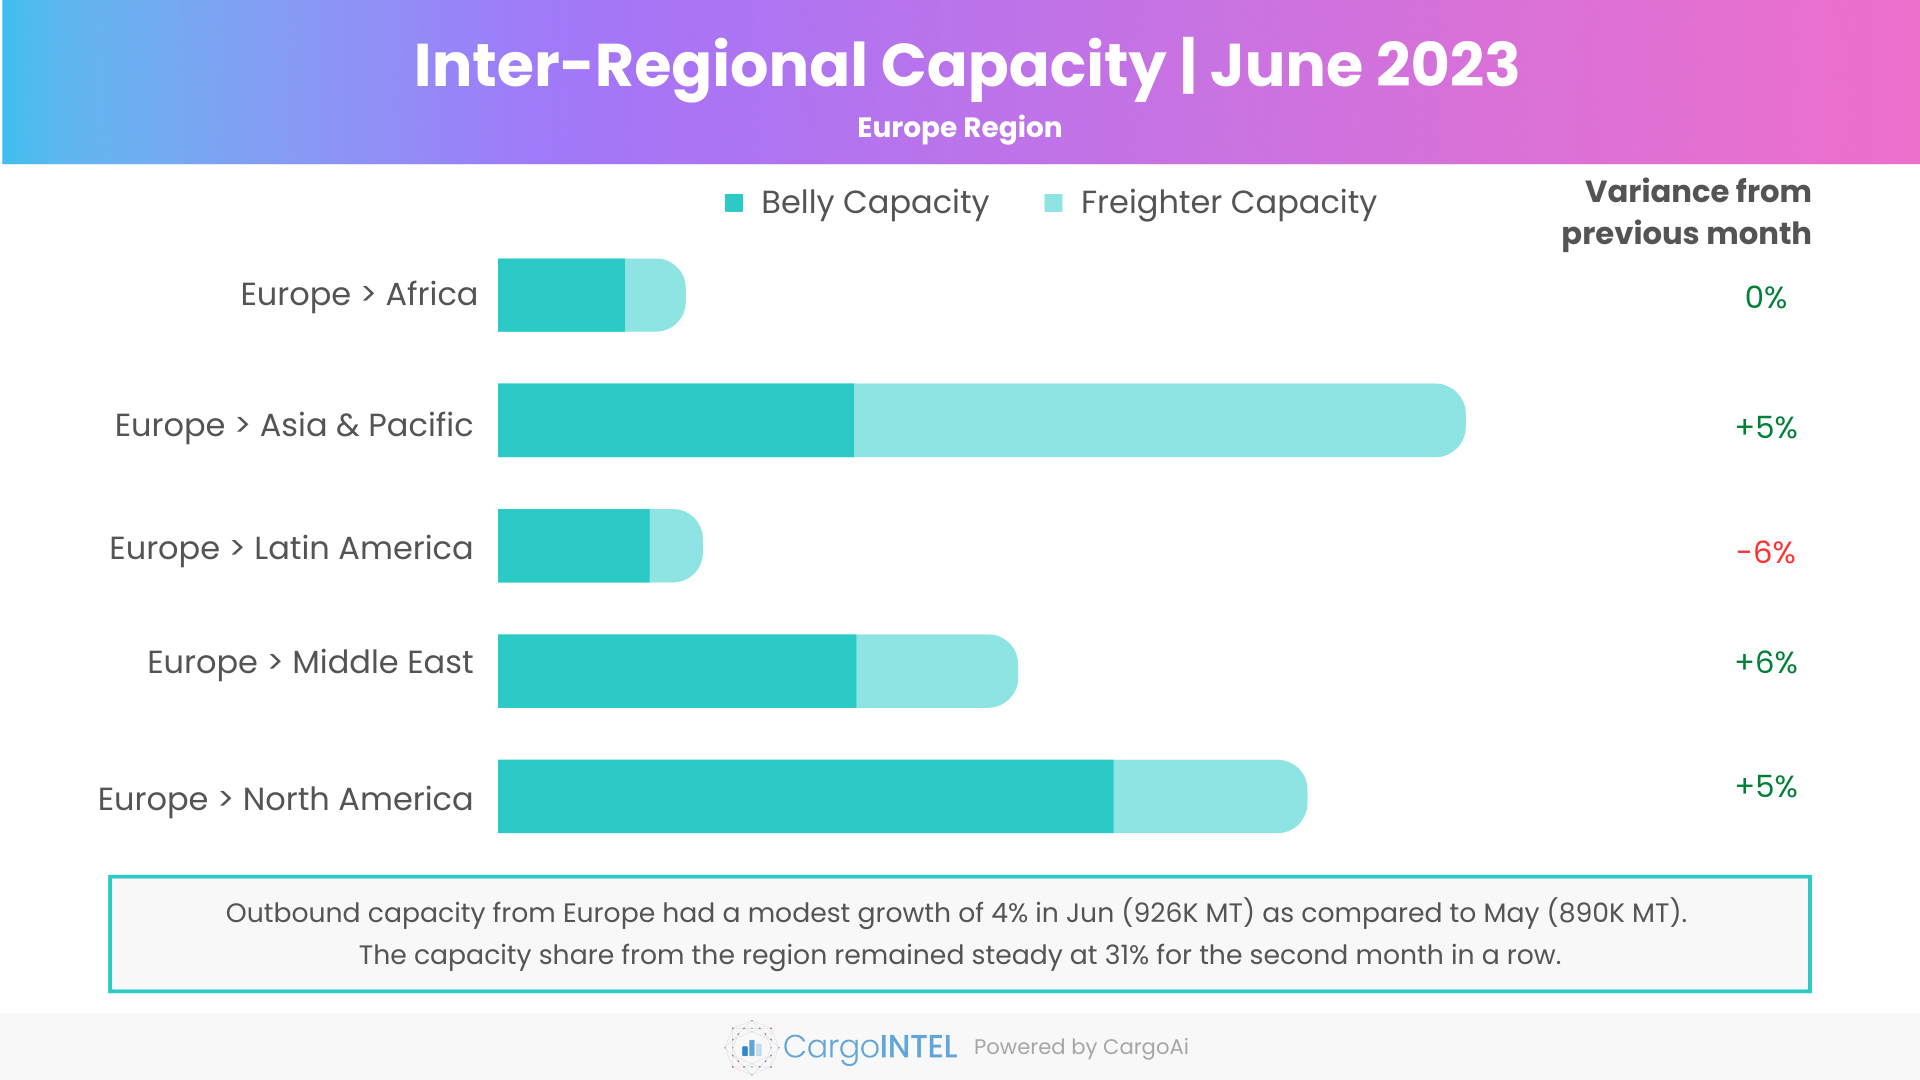 Air cargo capacity of Europe region of Jun 2023